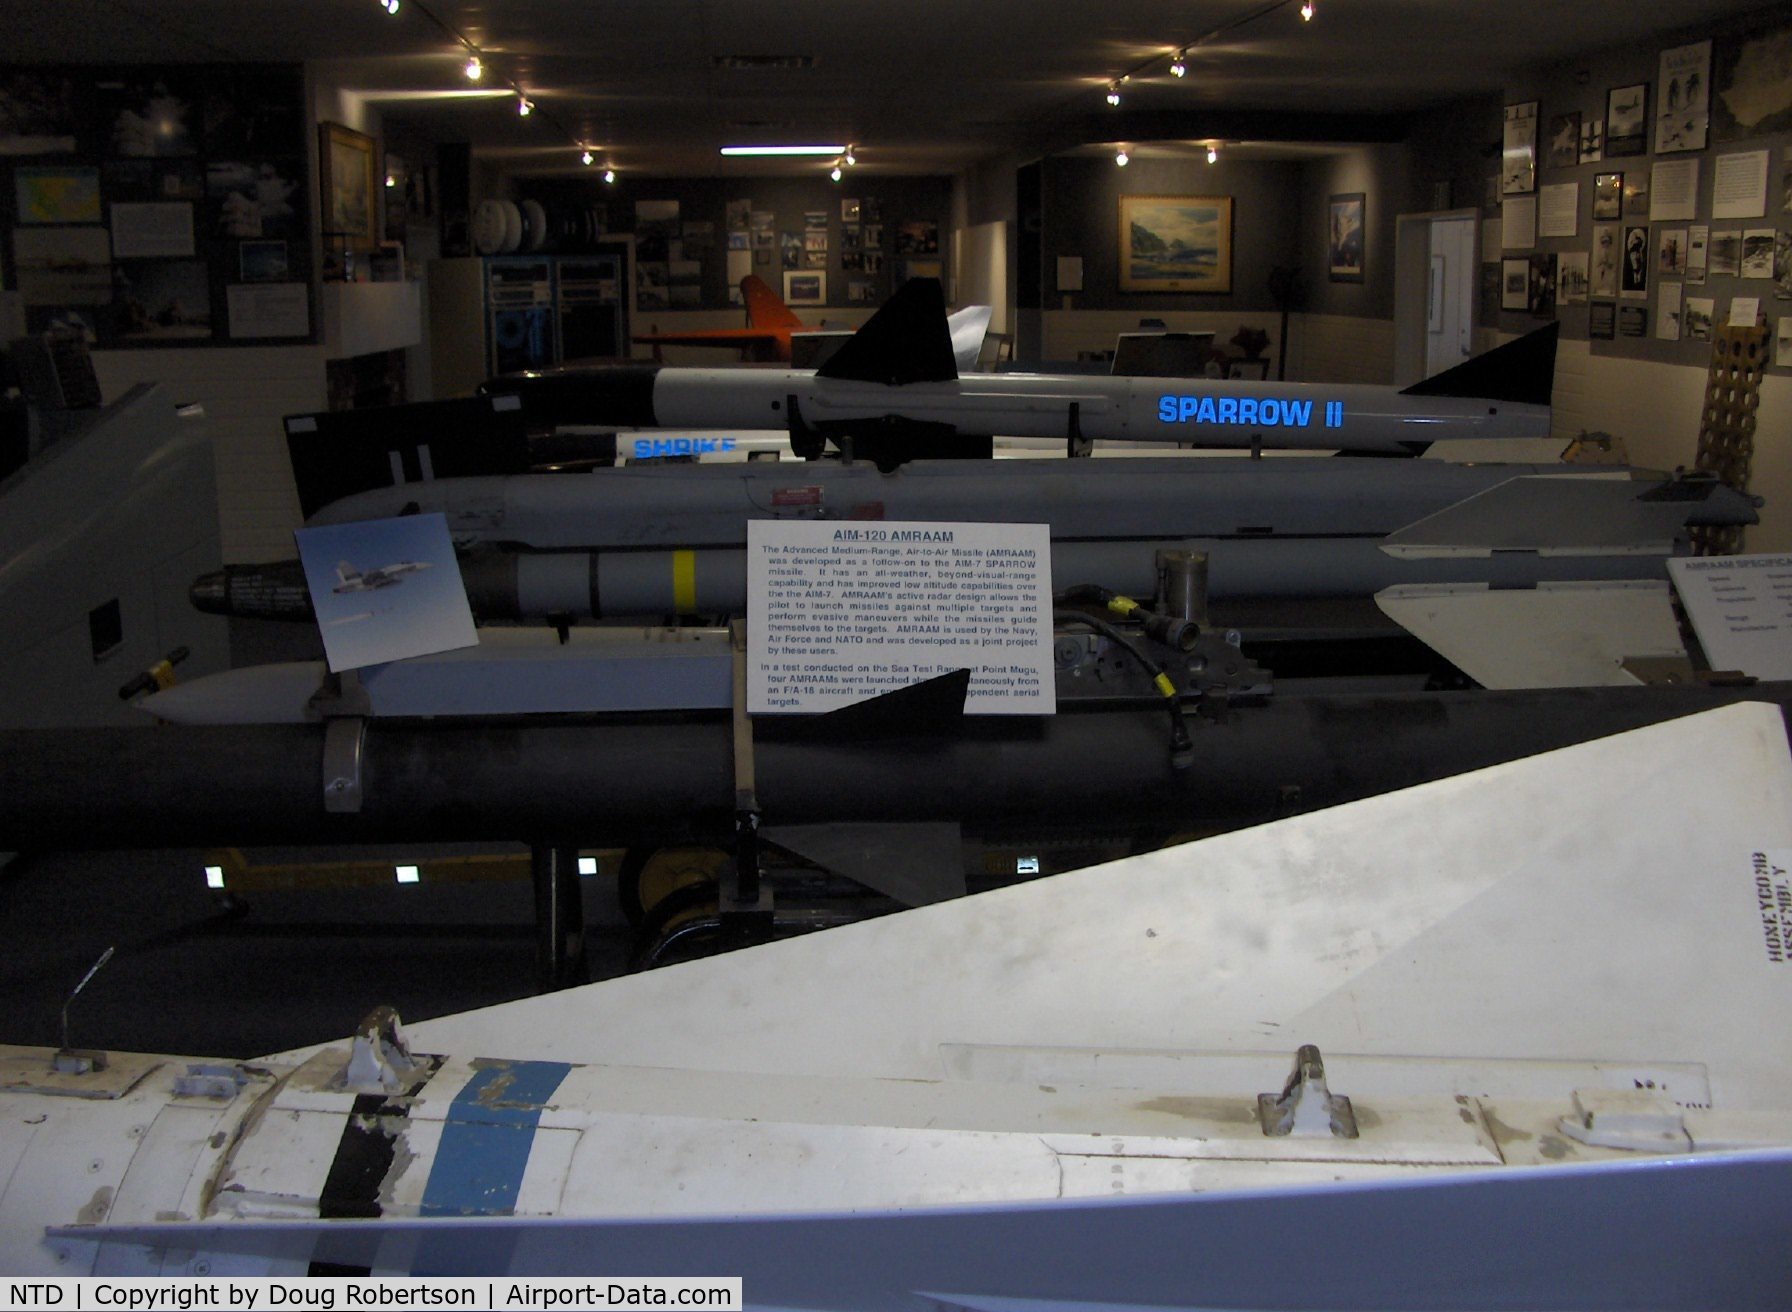 Point Mugu Nas (naval Base Ventura Co) Airport (NTD) - AIM-7 SPARROW II, AGM-45 SHRIKE and AIM-120 AMRAAM  missiles